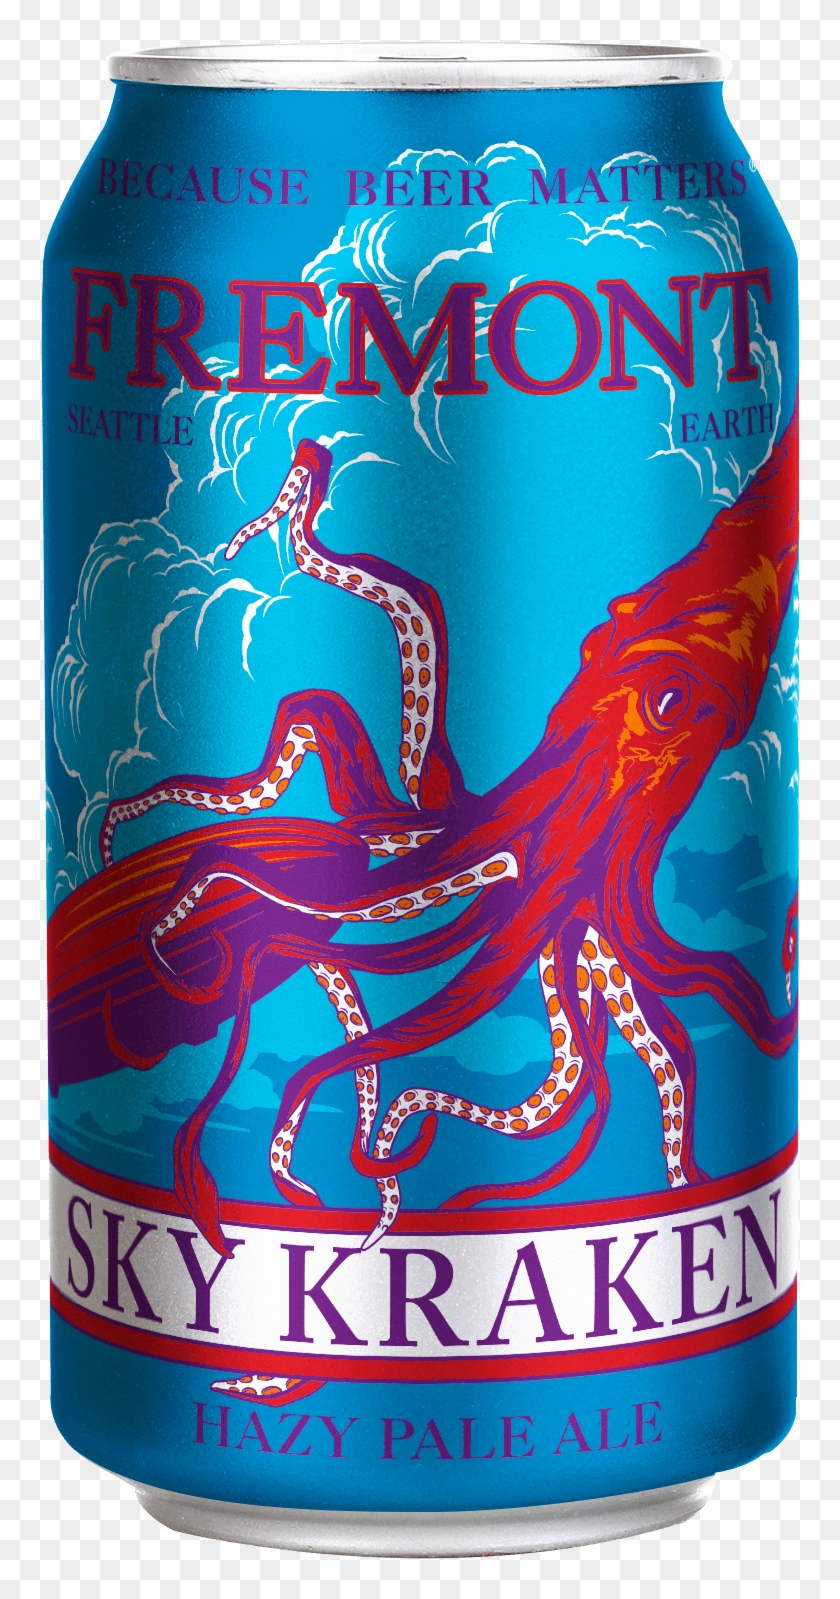 Fremont Brewing Releases The Sky Kraken - Fremont Brewing Sky Kraken Clipart #2204944